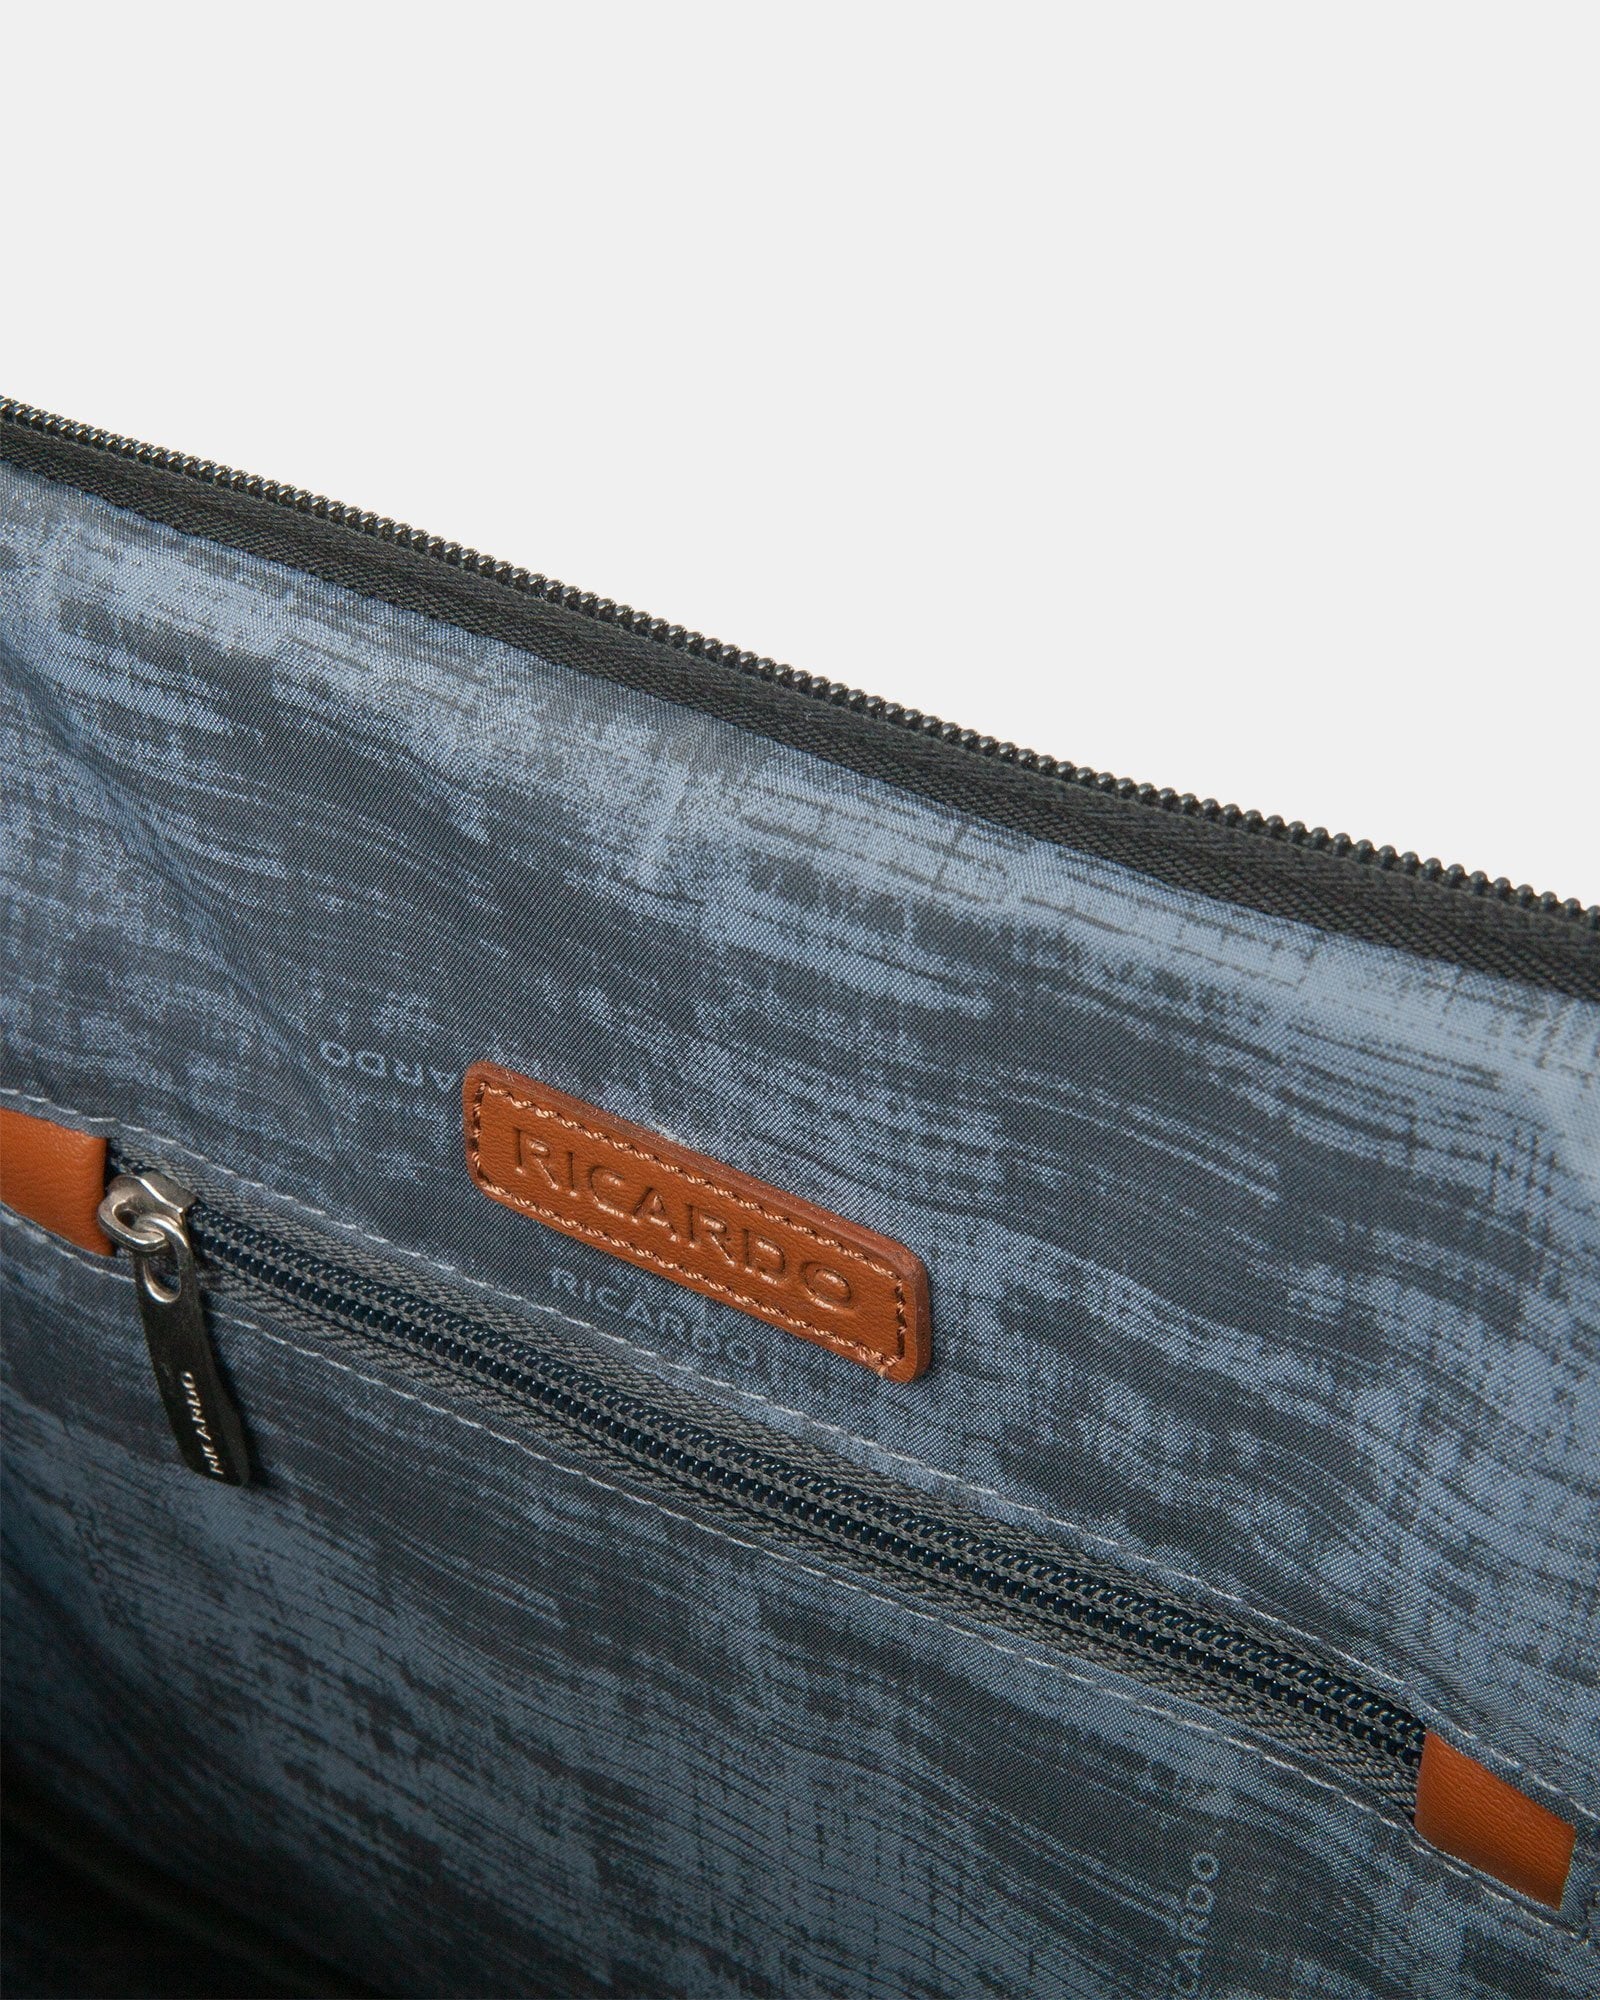 Ricardo Bevery Hills Sausalito Duffle Bag For 15” Padded Sleeve & Tablet Pocket